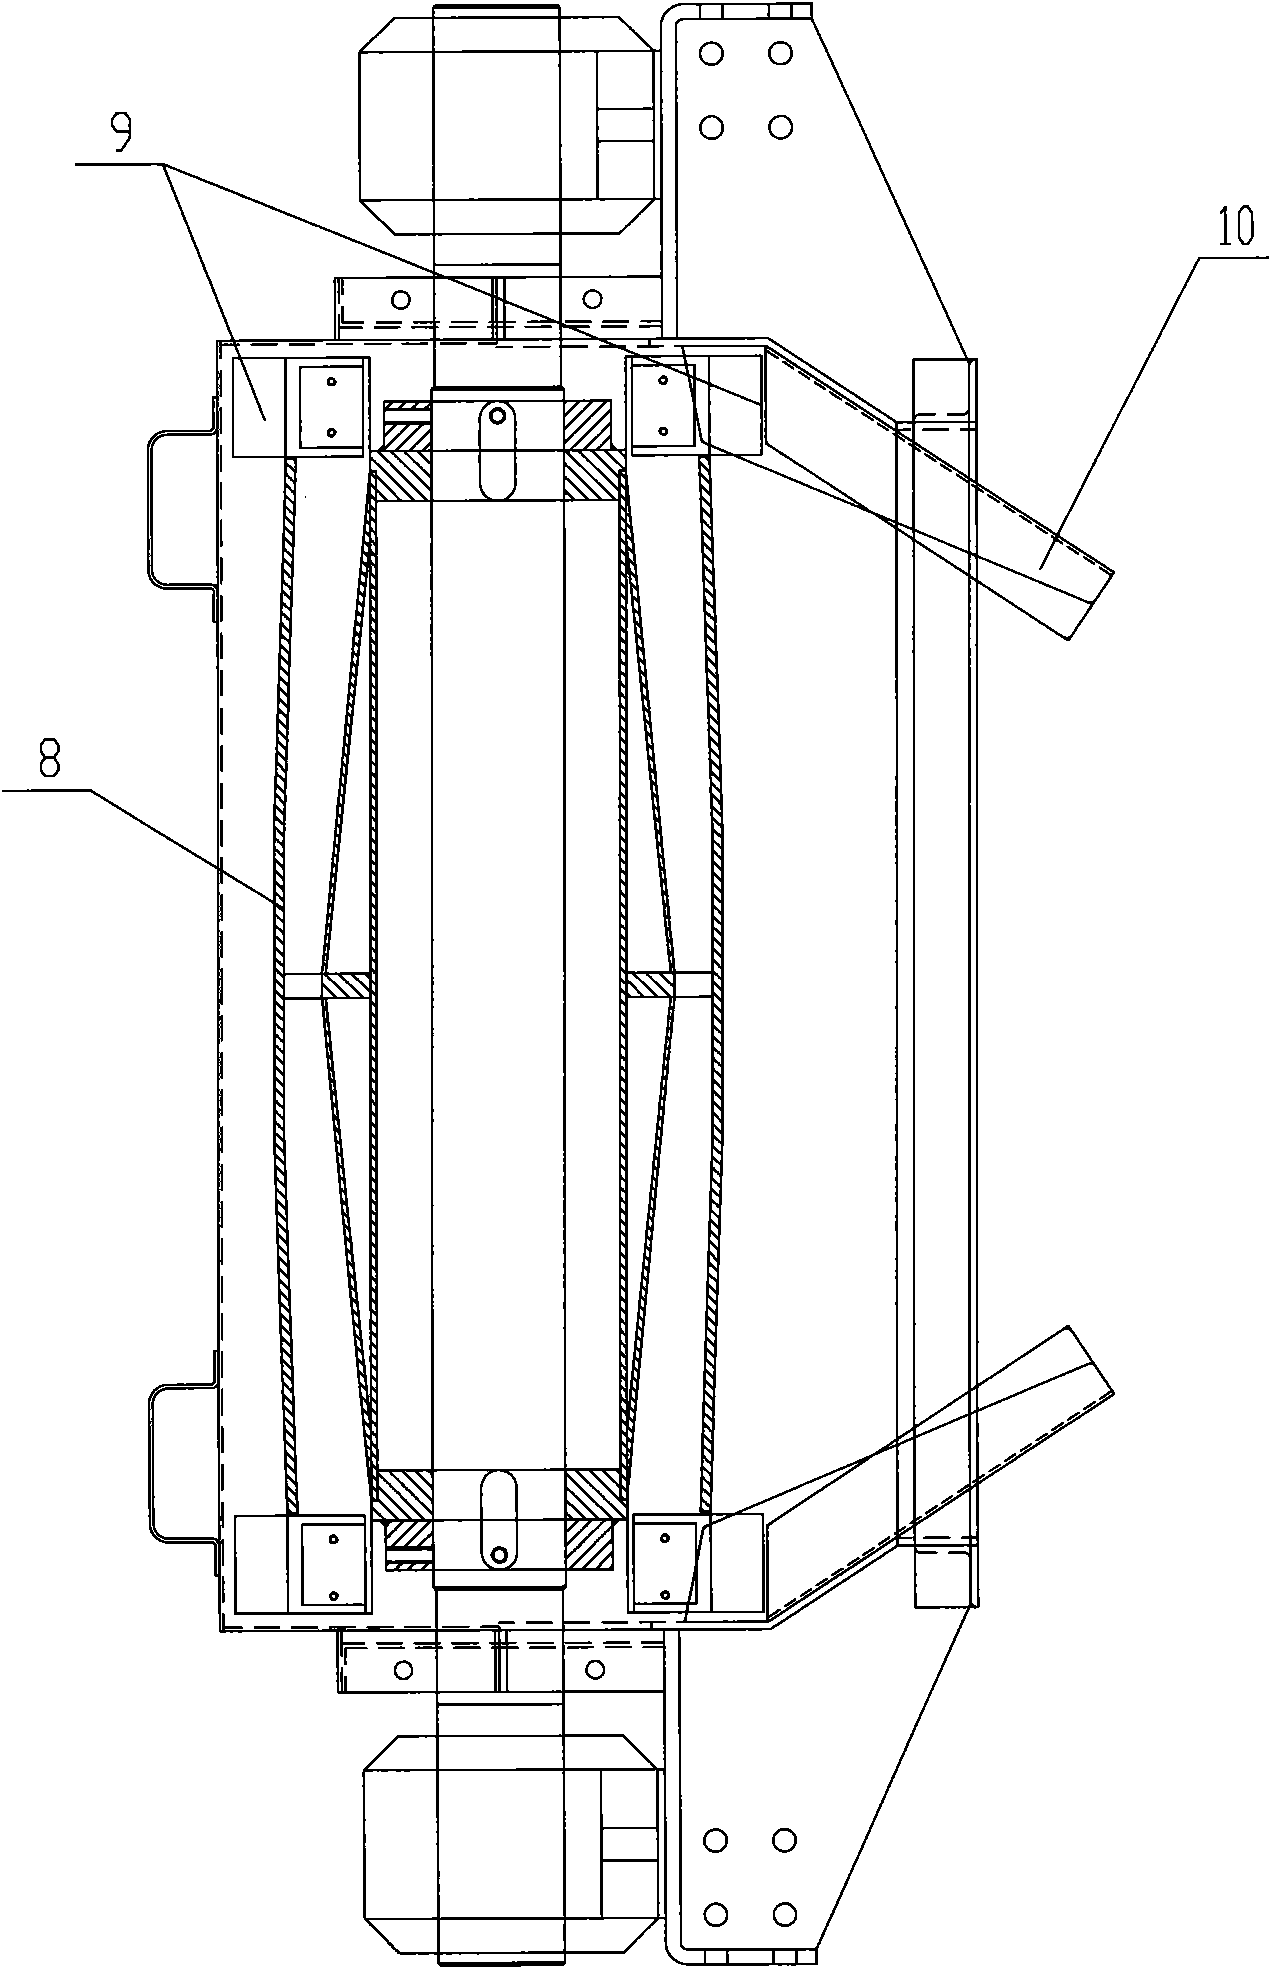 Single-carrier-roller belt type conveyer